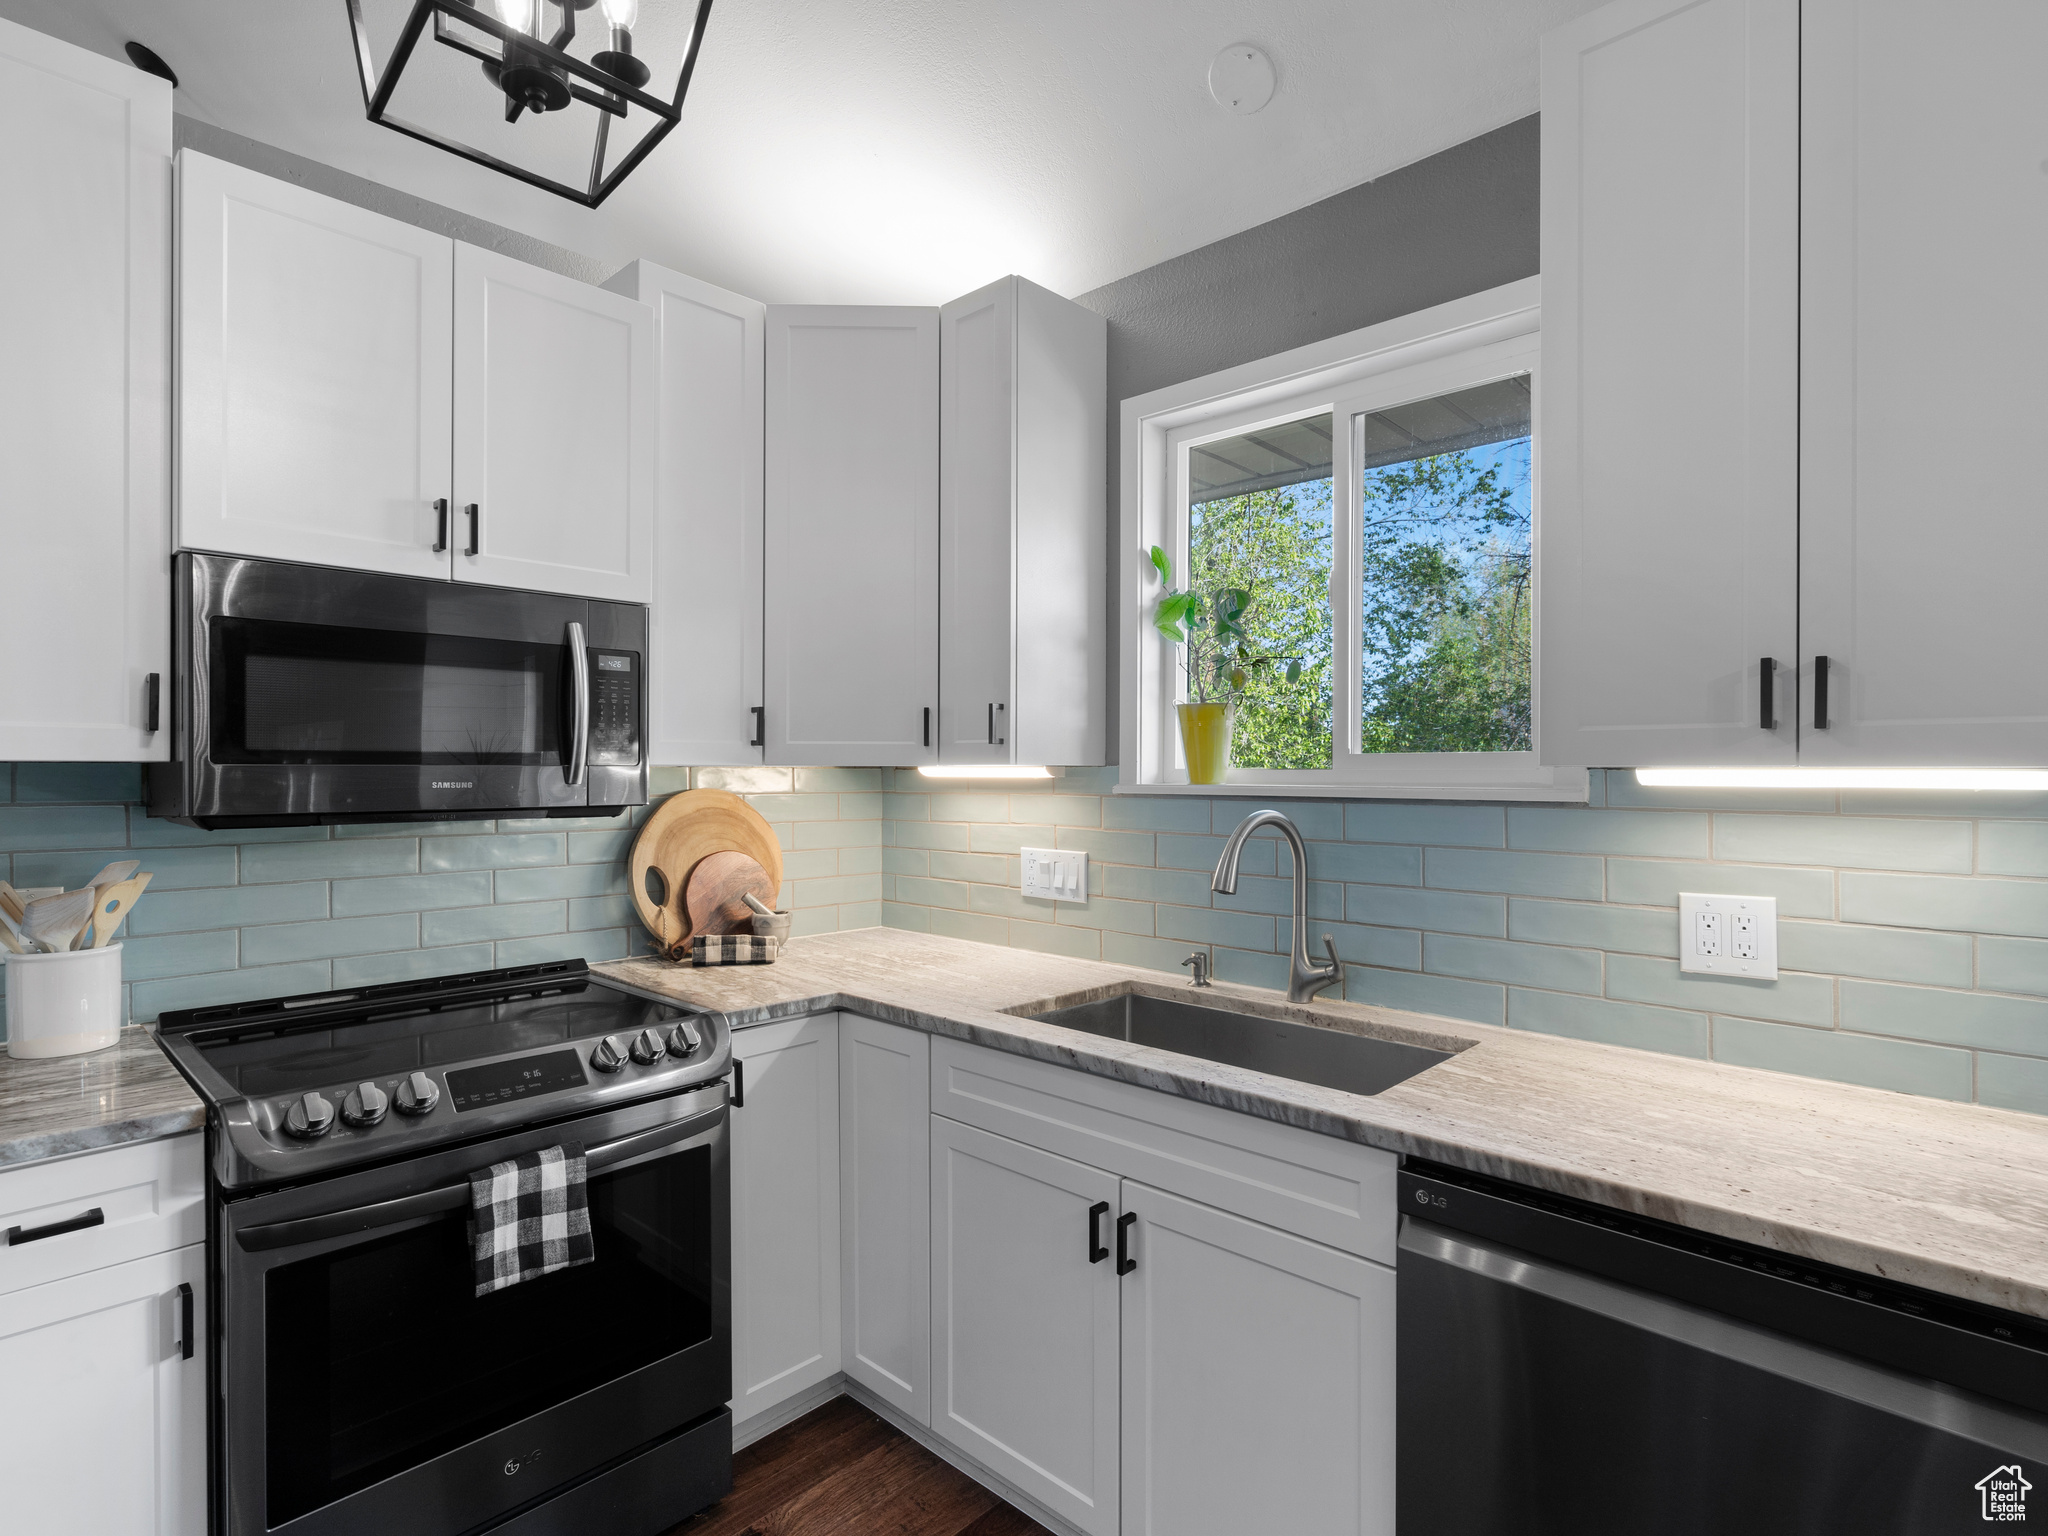 Kitchen with sink, backsplash, dark hardwood / wood-style flooring, stainless steel appliances, and light stone countertops